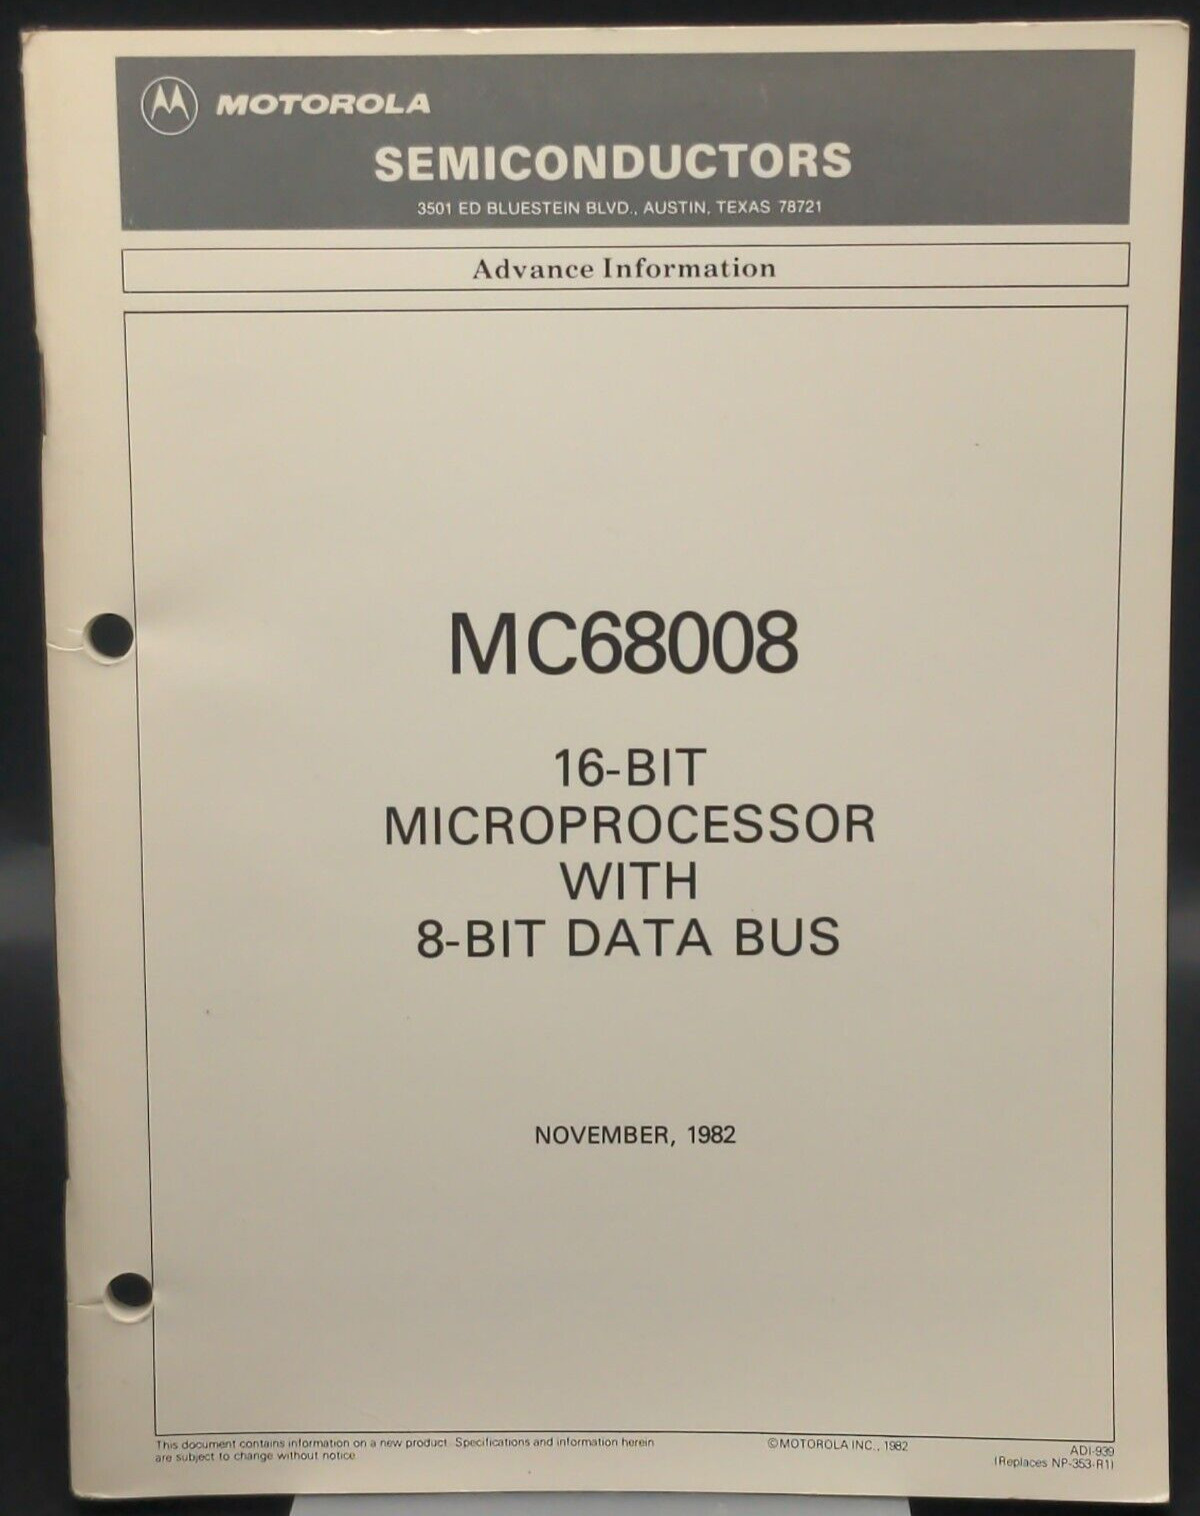 MOTOROLA MC68008 Semiconductor Chip Advance Information Reference Guide Nov 1982